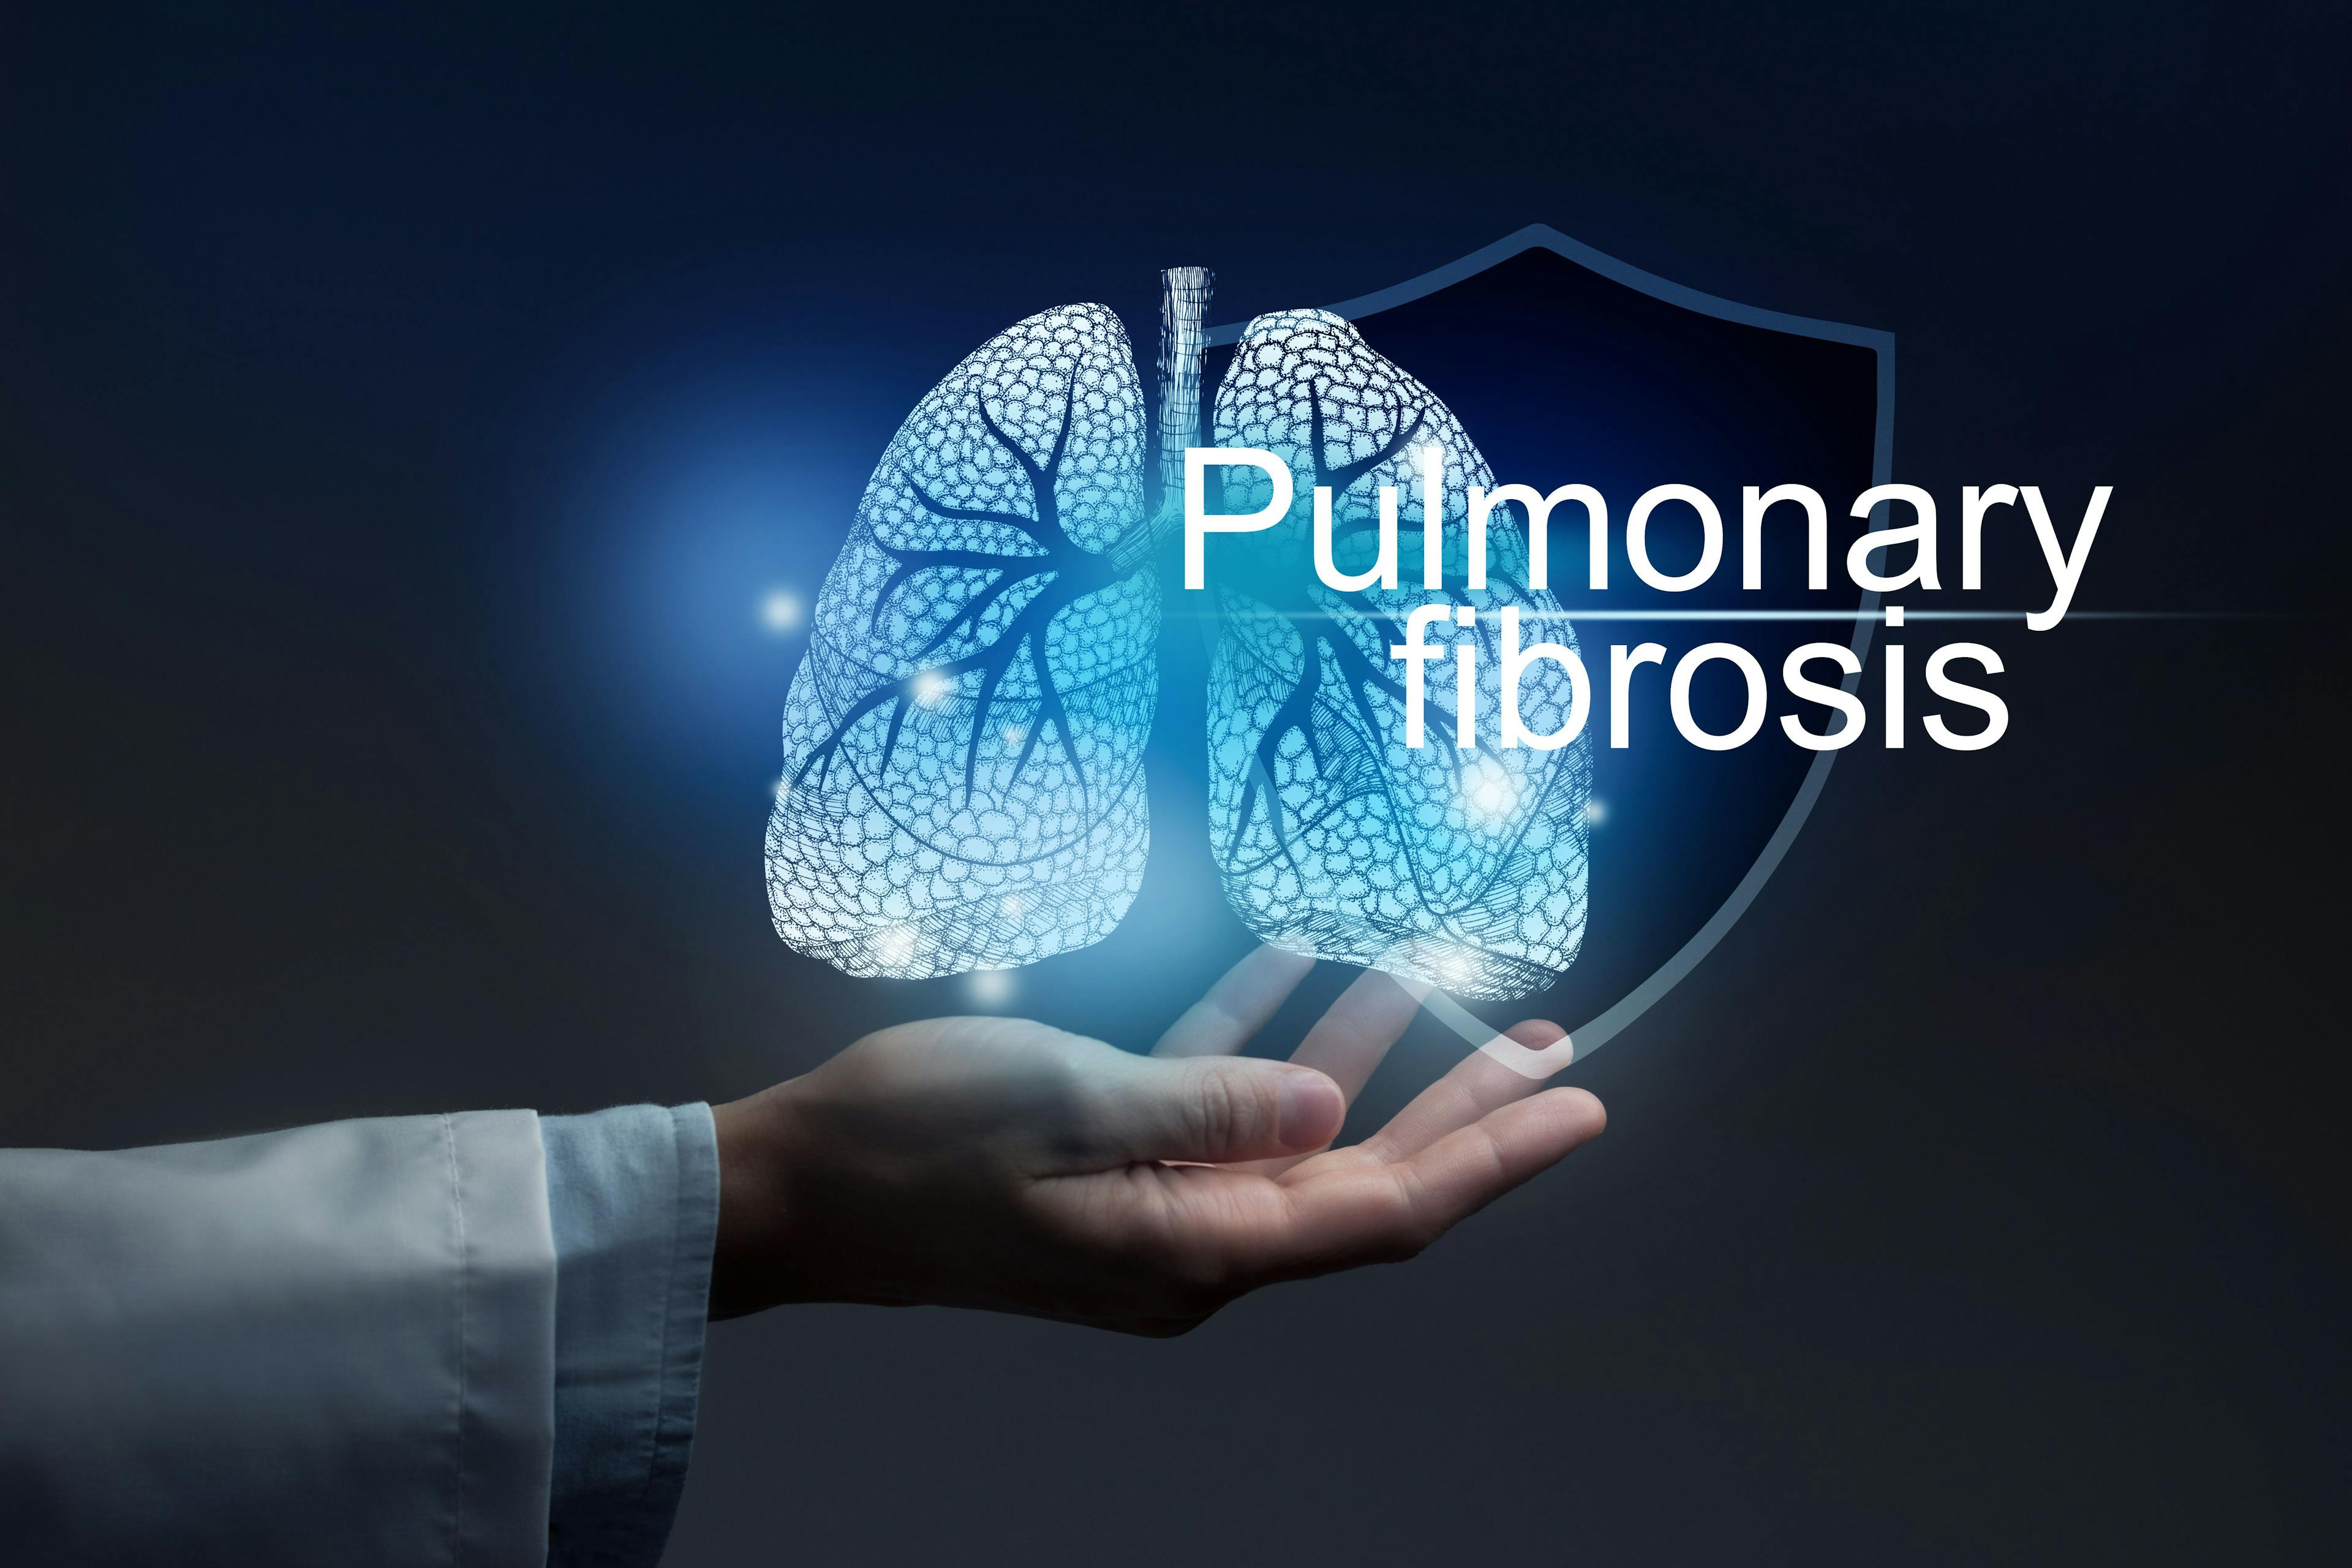 New Blood Biomarker Study Identifies Distinct Endotypes in Pulmonary Fibrosis Patients